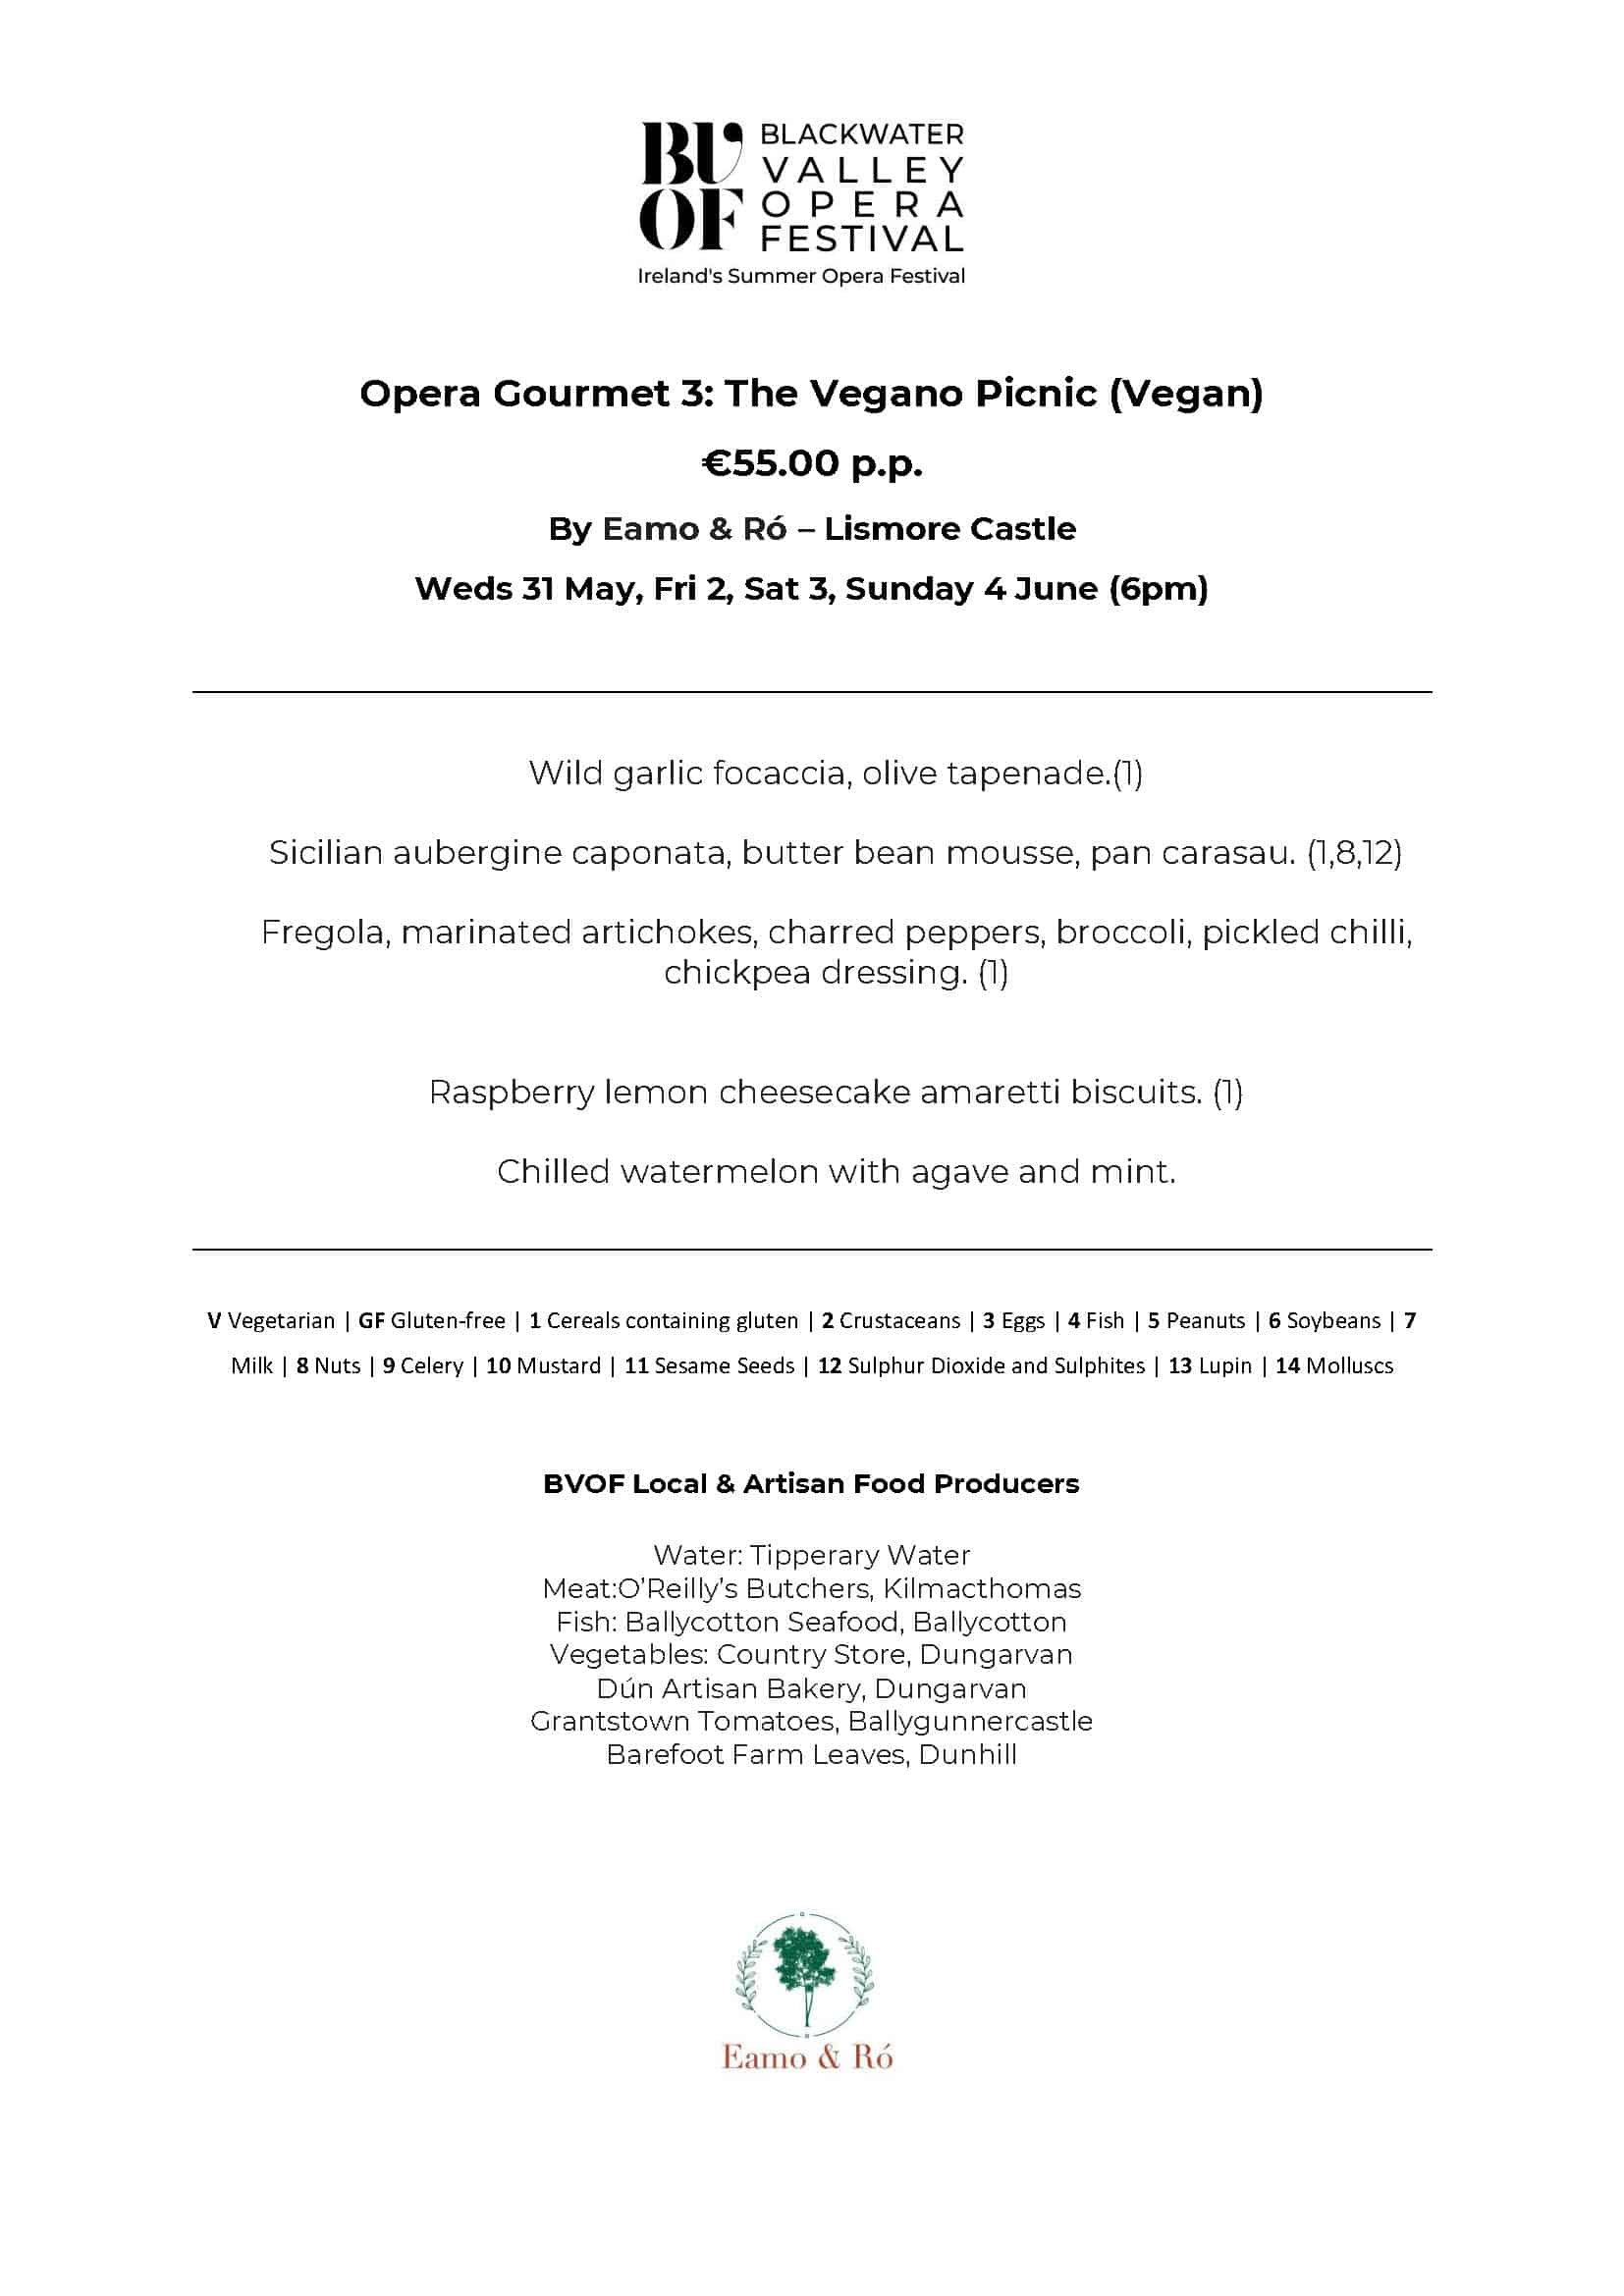 Opera Gourmet 3 The Vegano Picnic (Vegan)